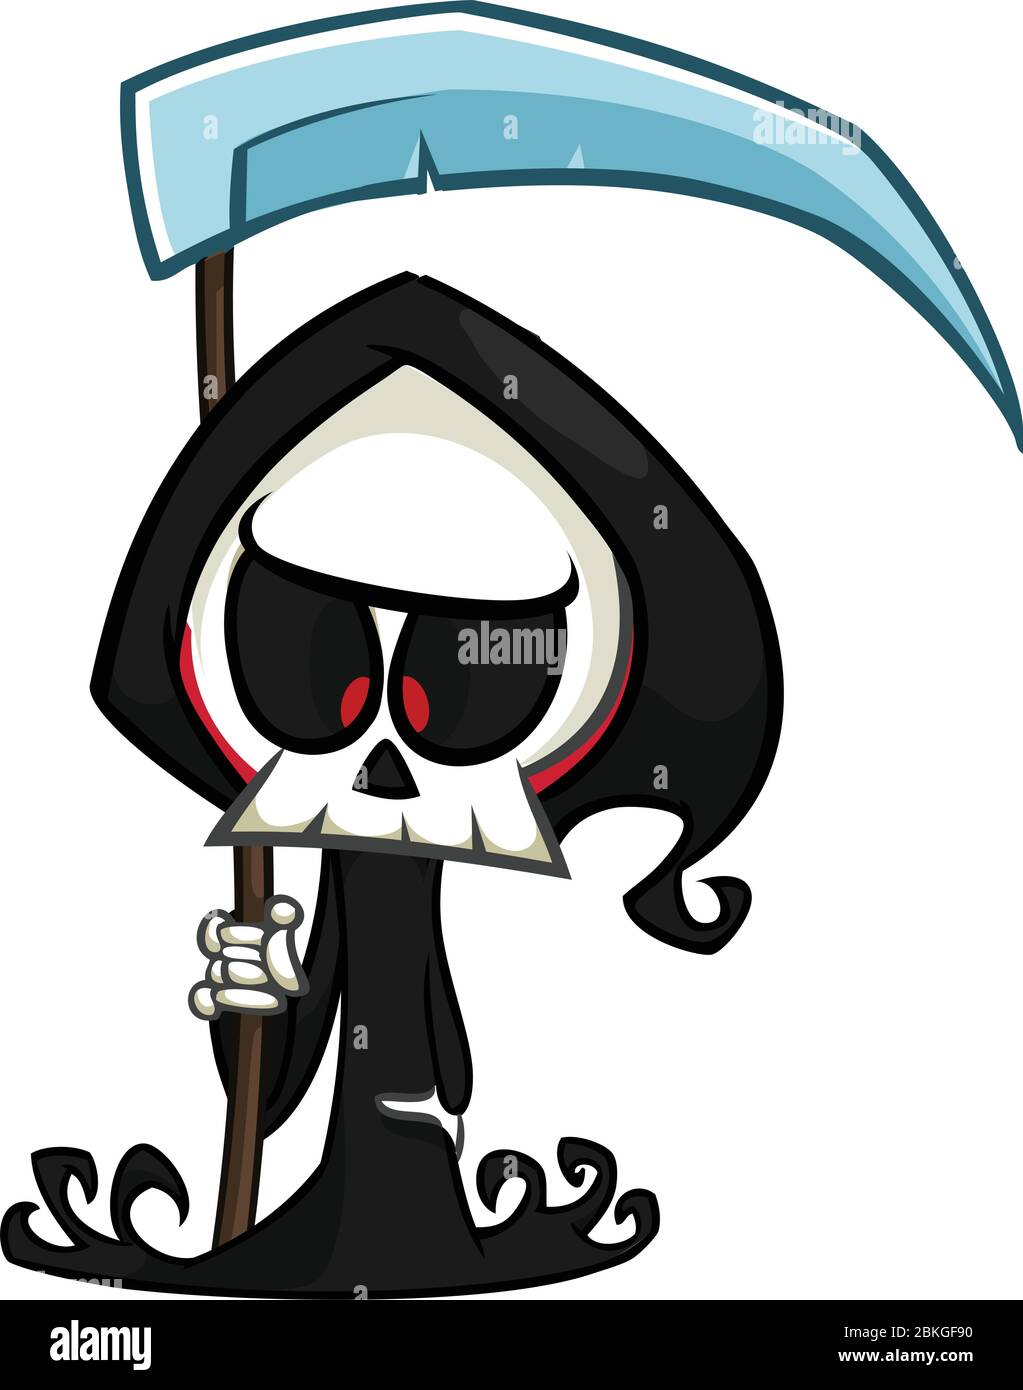 Premium Vector  Cute grim reaper holding scythe cartoon icon illustration  wake up